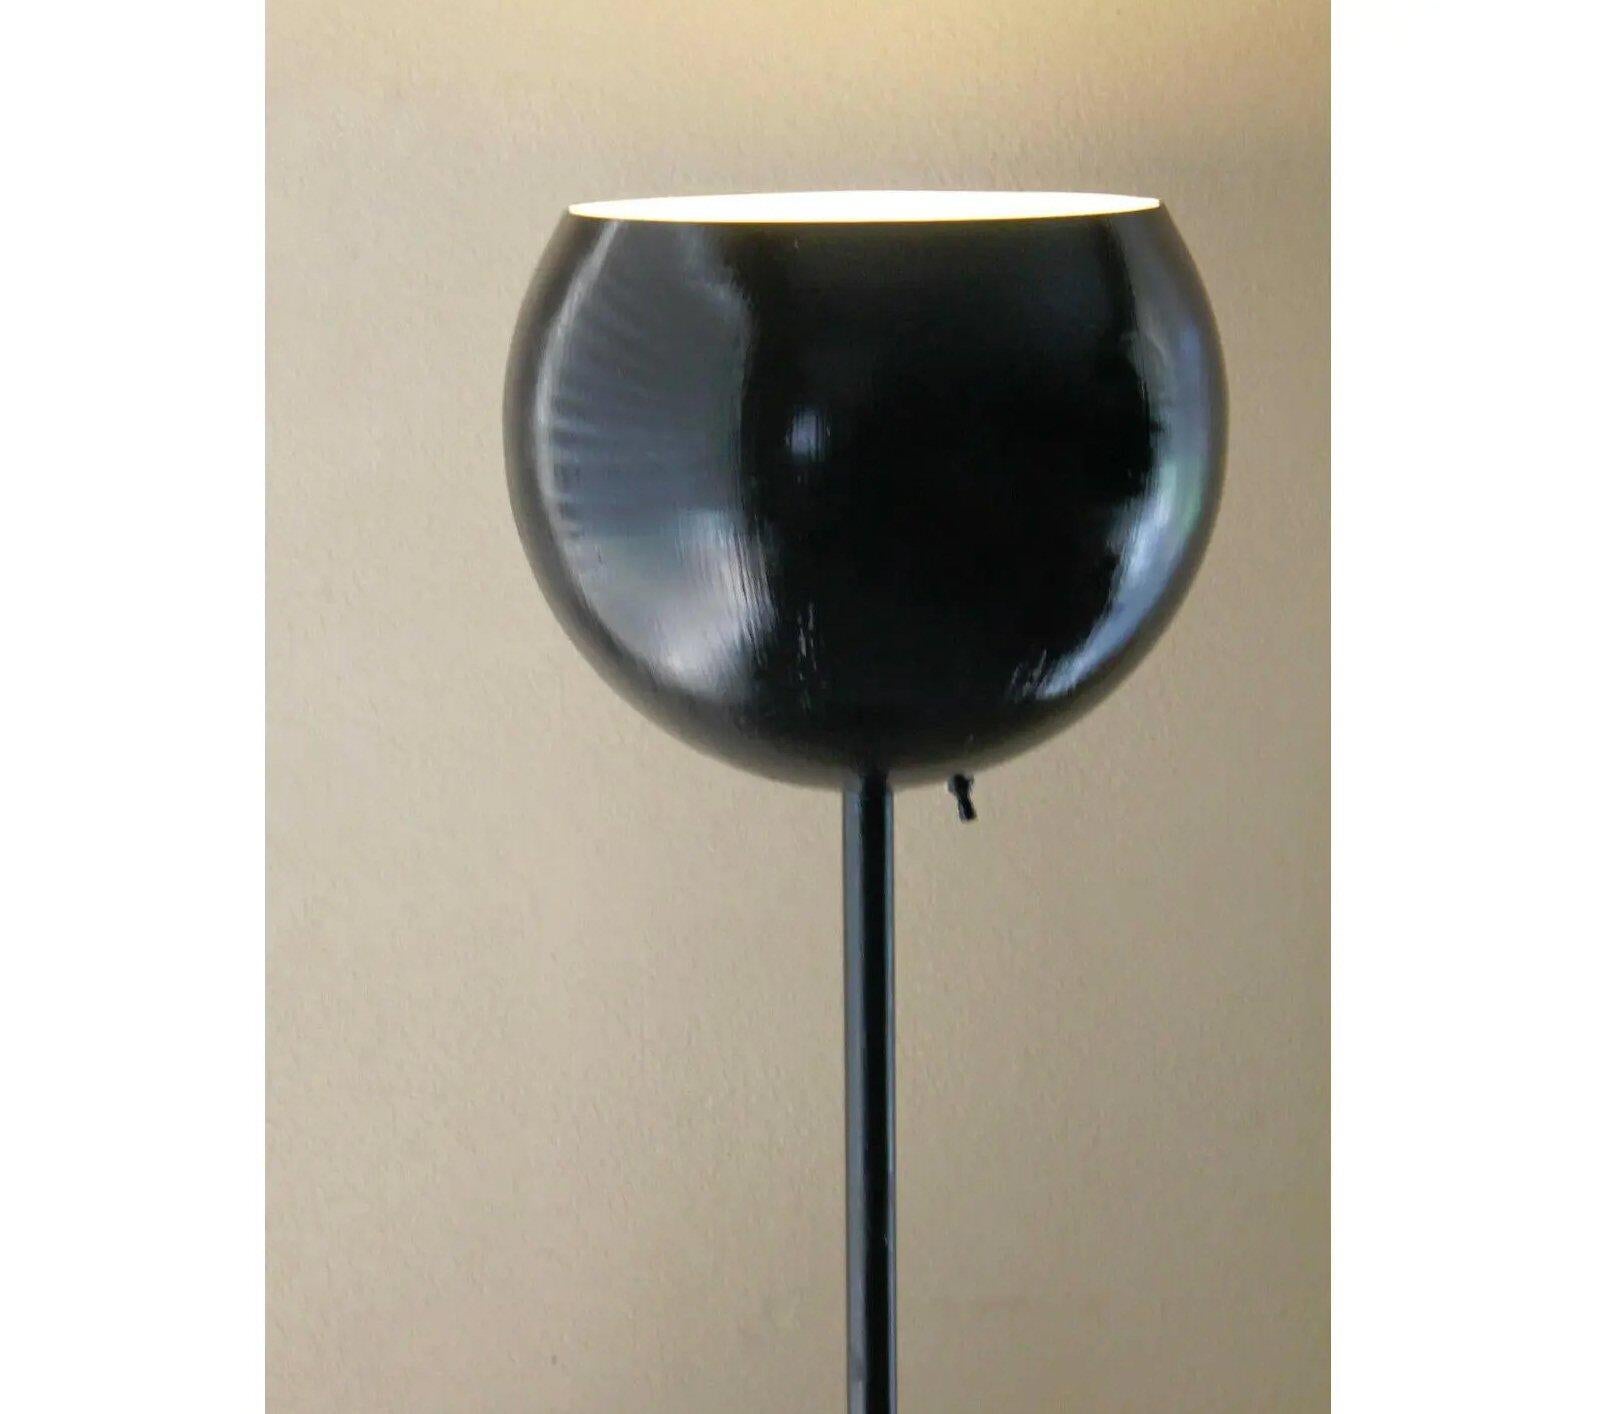 GOOD DESIGN! 

ITALIAN TYLE LAUREL FLOOR LAMP / TORCHIERE
MID CENTURY LIGHTING SCULPTURE
BLACK ENAMEL 

DIMENSIONS: HEIGHT 63